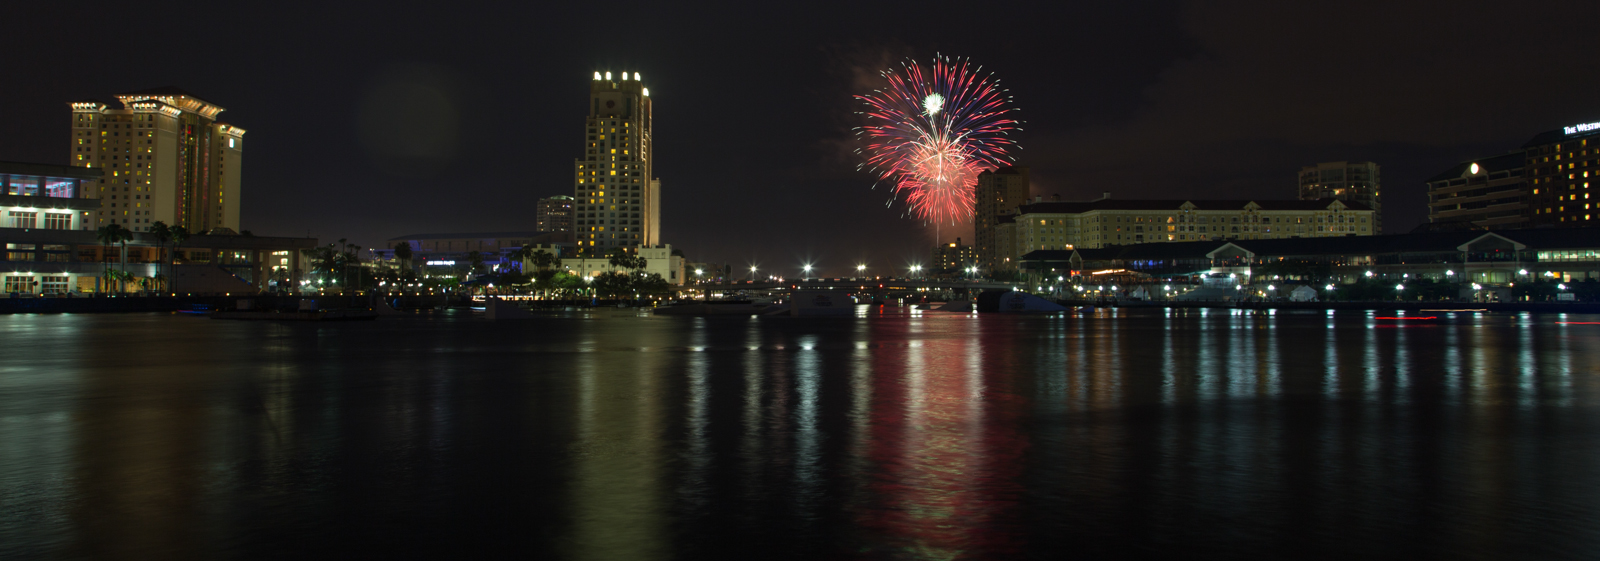 Tampa Fireworks Pano